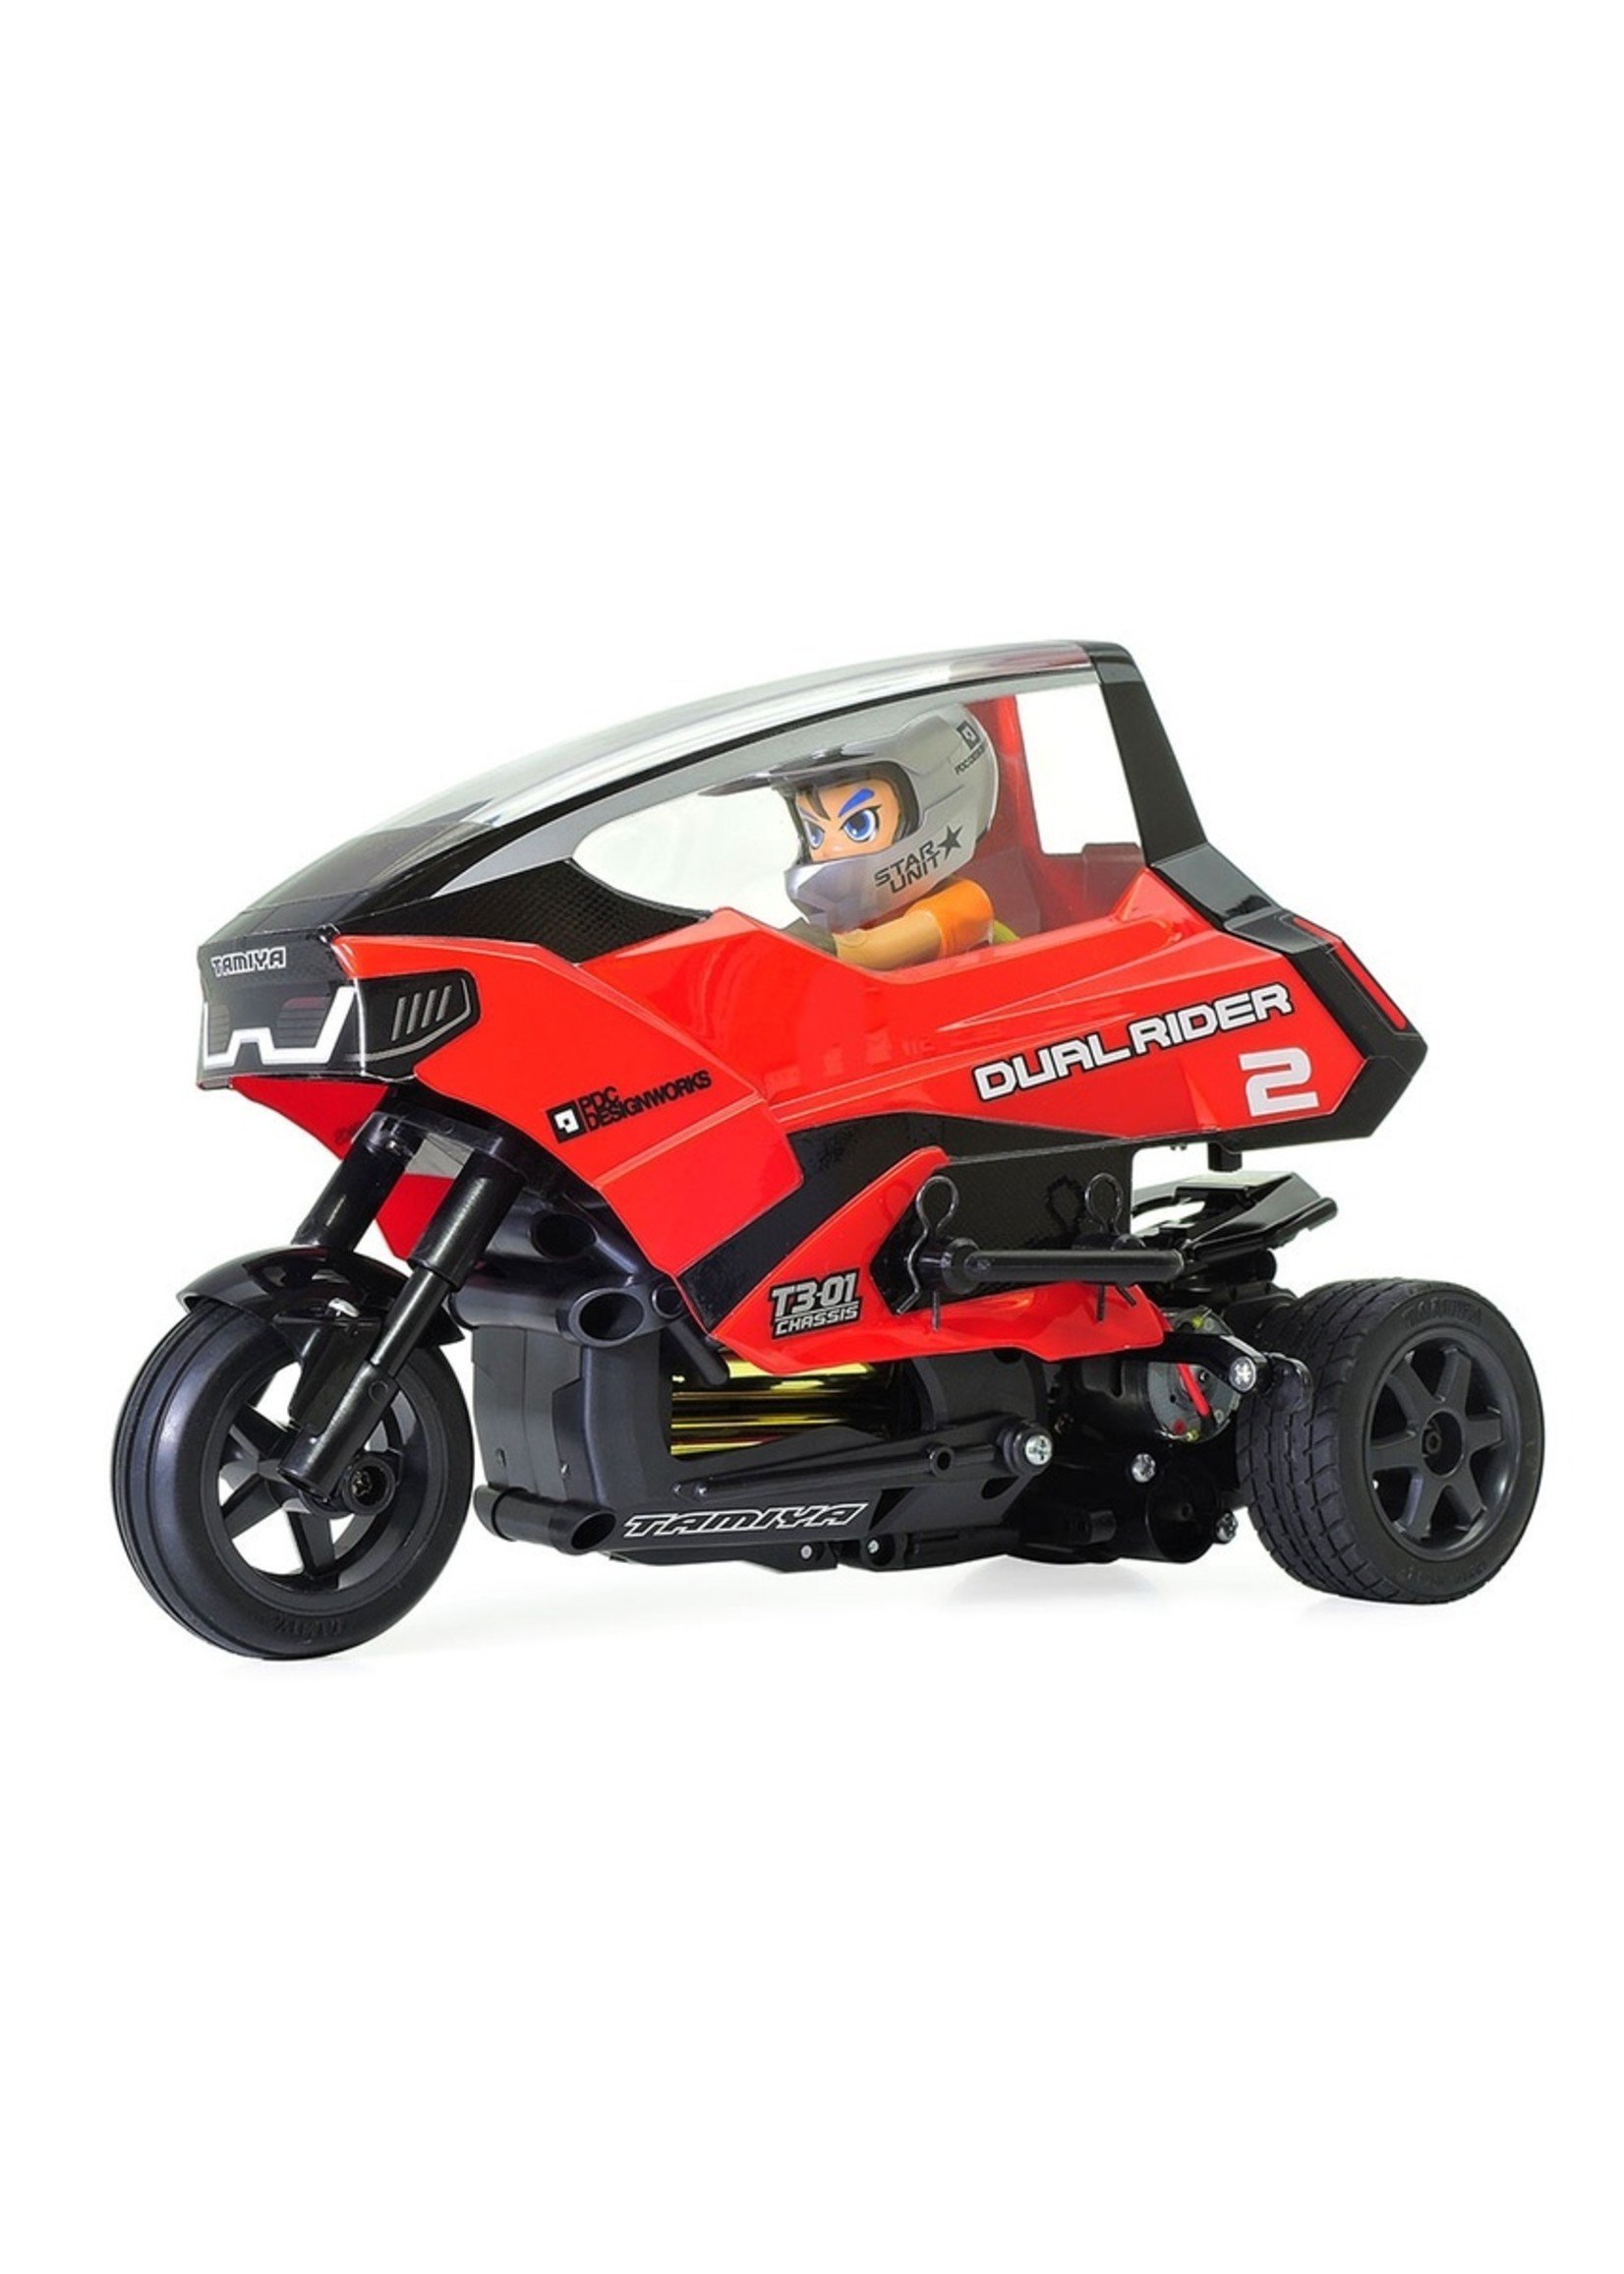 Tamiya 1/8 Dual Rider Trike - T3-01 Chassis Kit